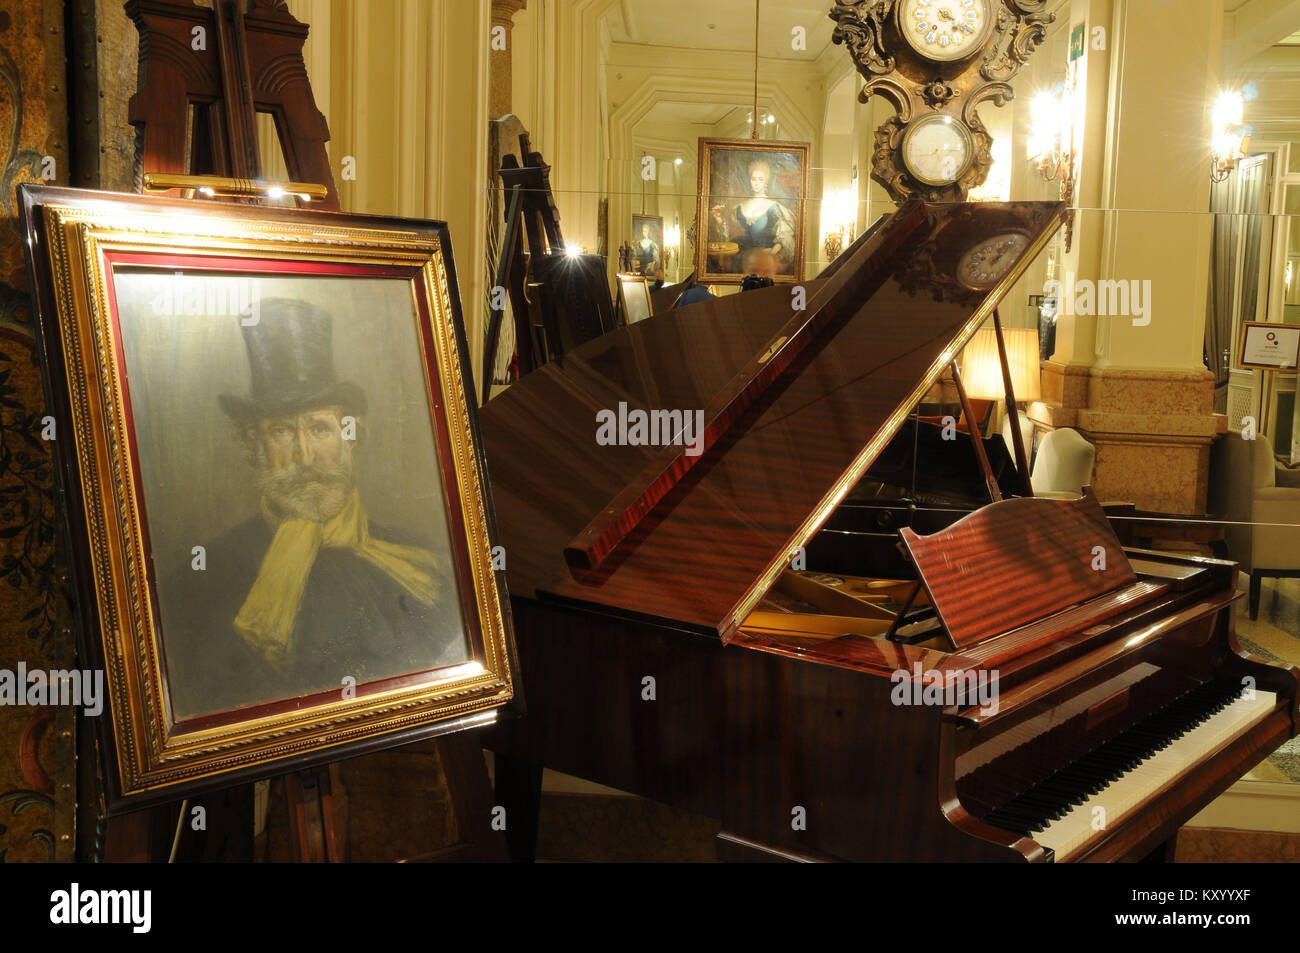 Horizontal Black White Inside Piano Stockfotos und -bilder Kaufen - Alamy